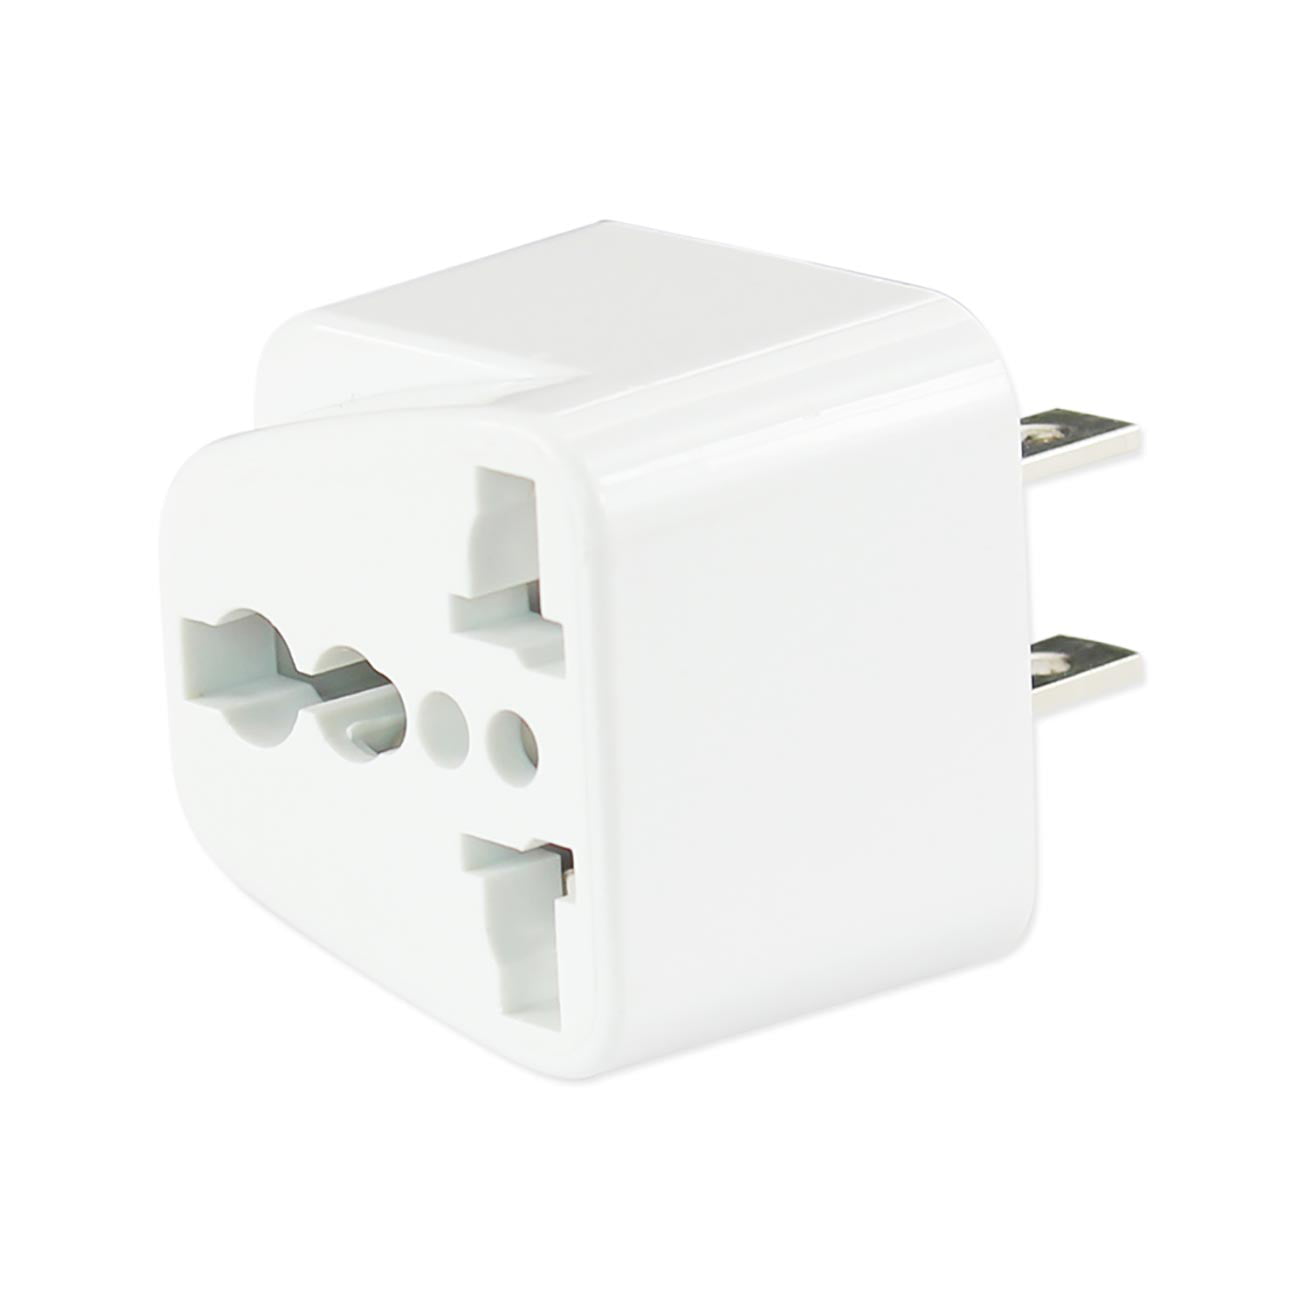 REGOKI US Travel Plug Adapter, [2 Packs] EU Europe/UK/Australia/China/Italy  to USA American Wall Outlet Power Adaptor Type B USA 3-Prong Male Plug  Socket,White 